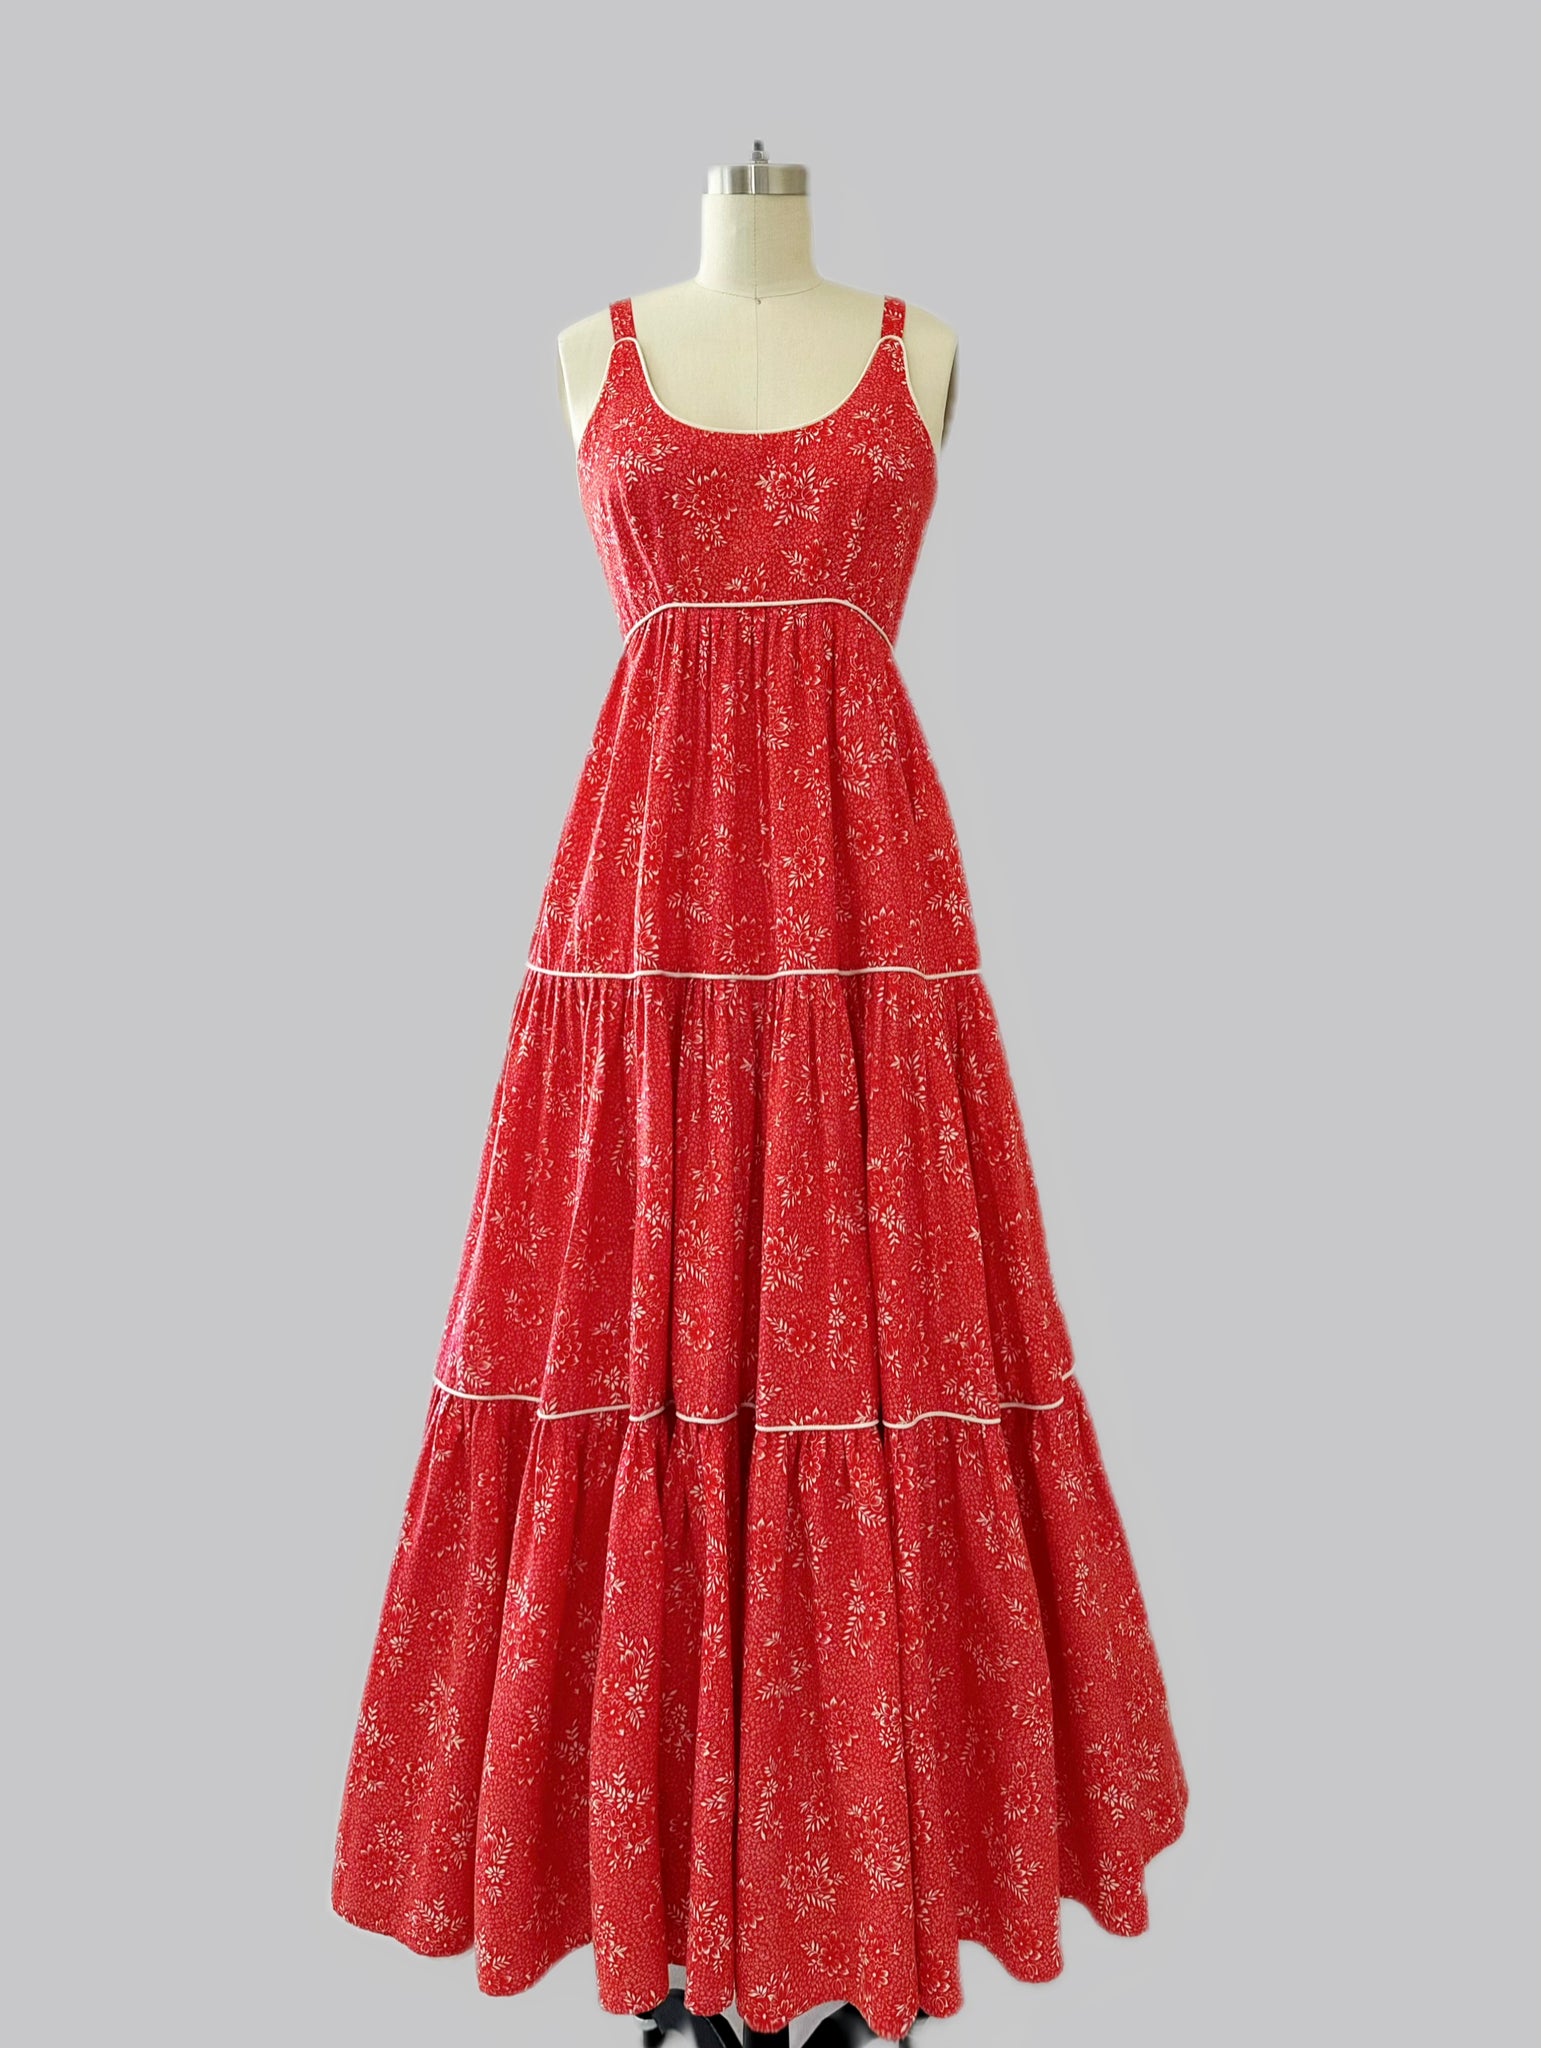 Victor Costa Crimson Garden Dress   c. 1970s